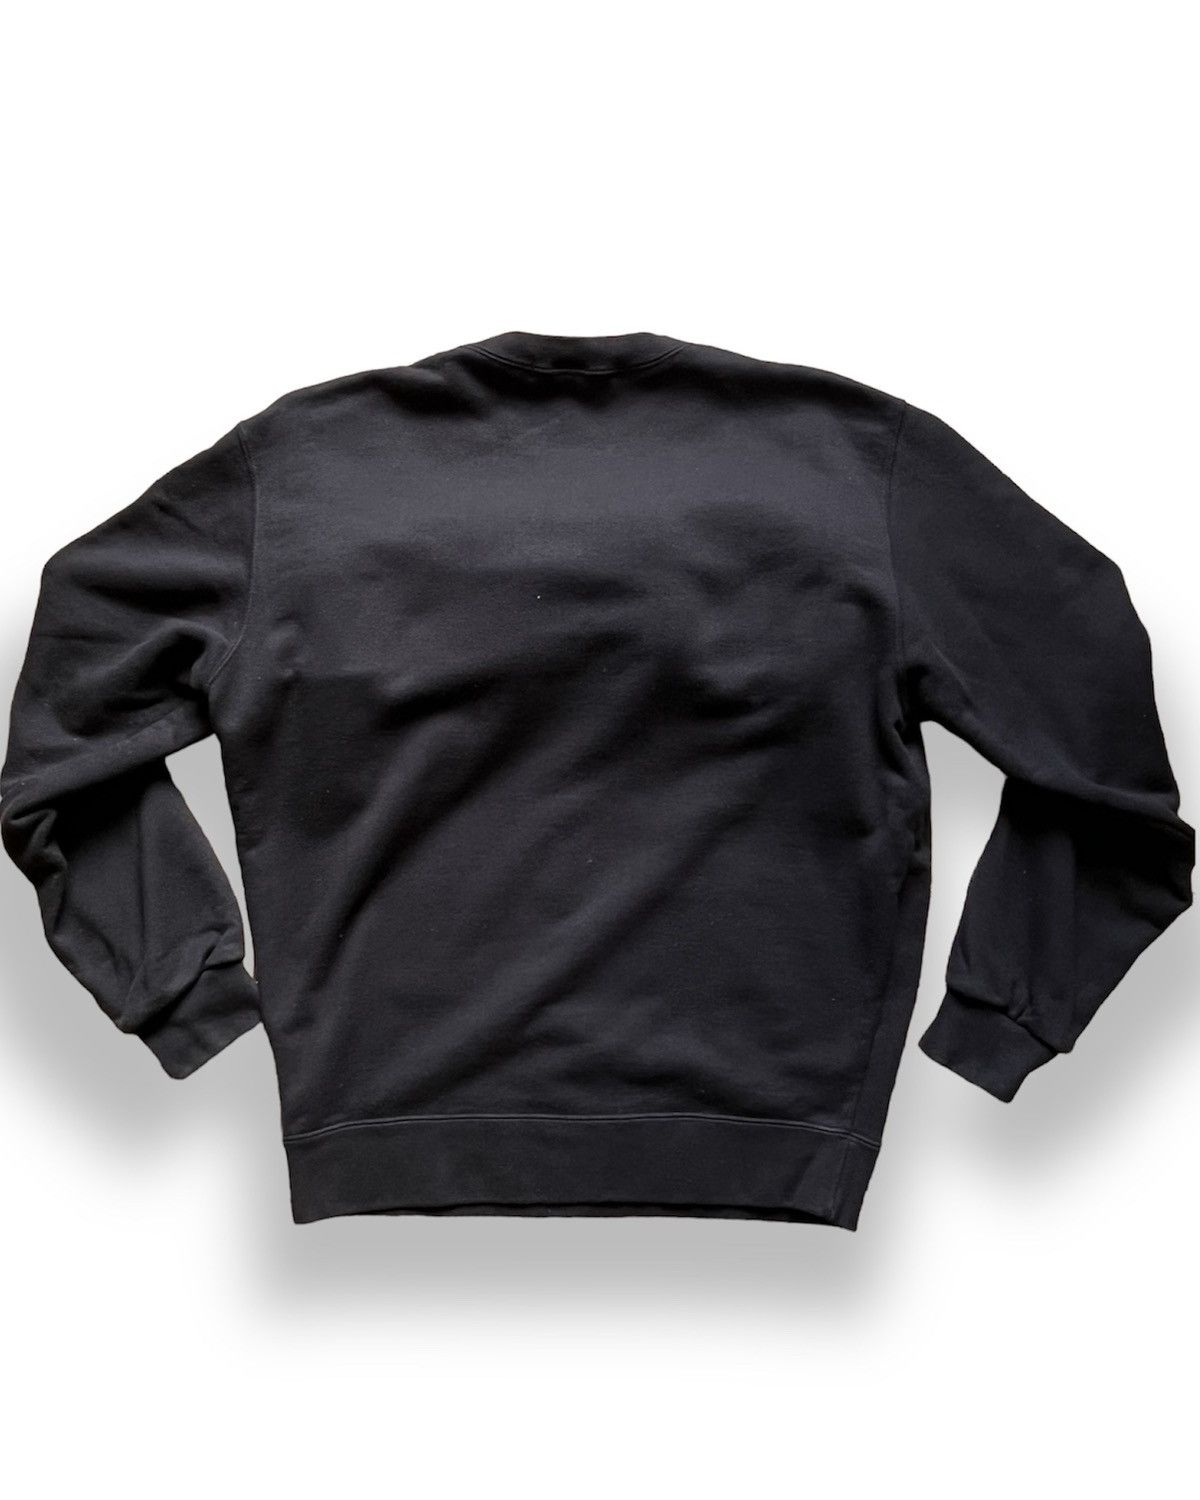 Designer - Rare Mini Teddy Bear Distressed Black Crewneck Sweater - 17